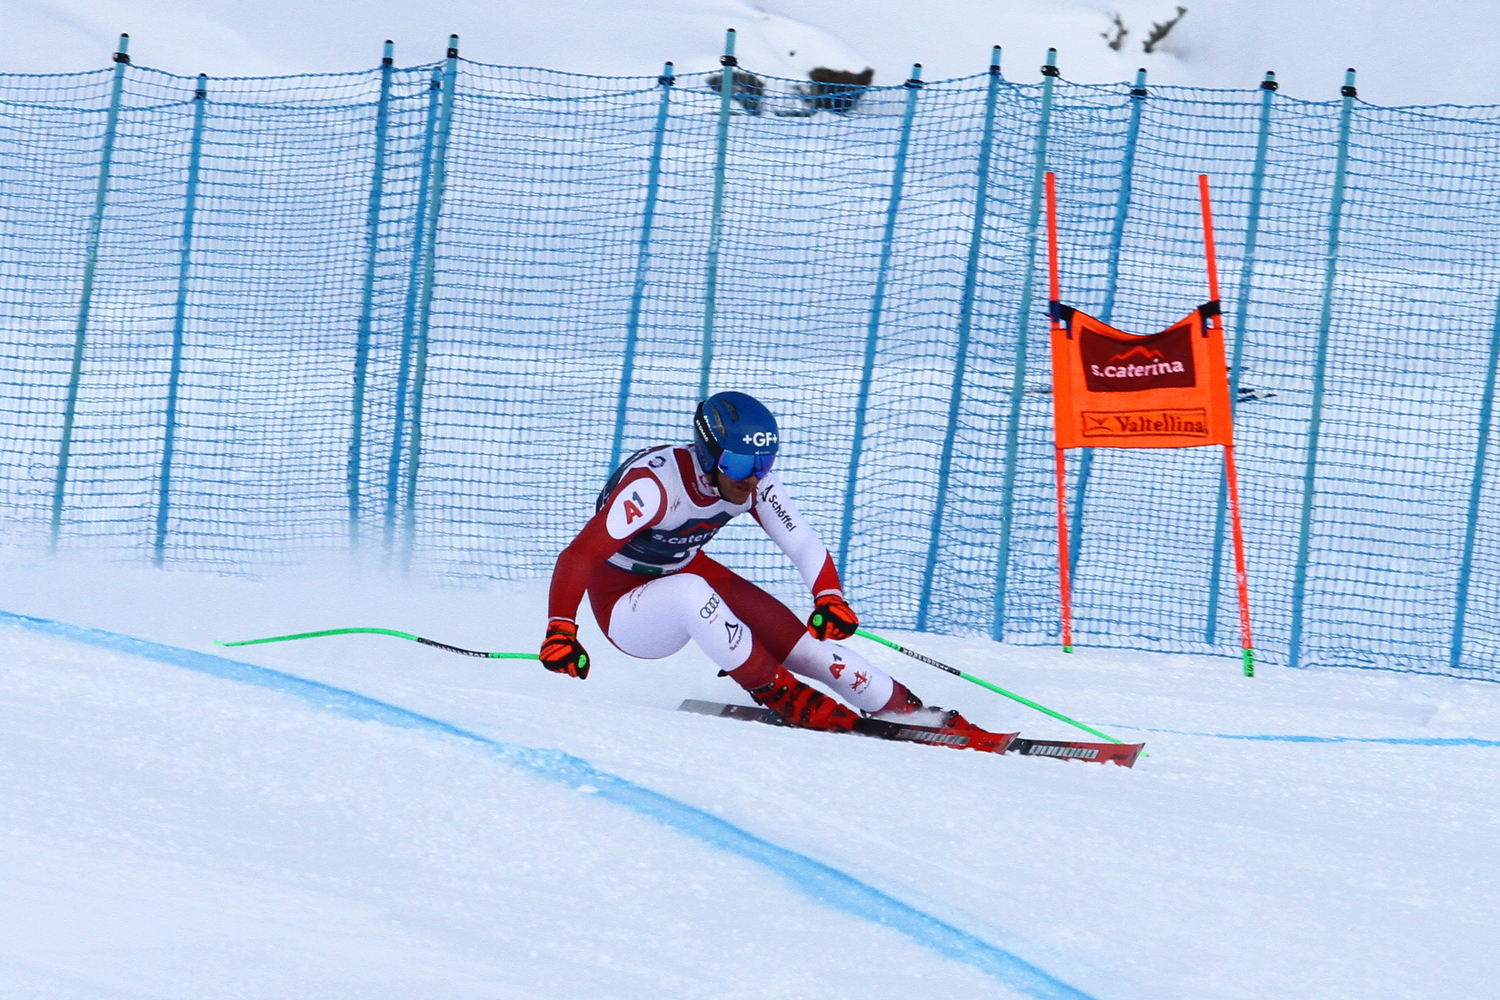 Fis Alpine Skiing Europa Cup, Santa Caterina Valfurva (ITA), 14/12/23, Manuel Traninger, photo credit: Acmediapress